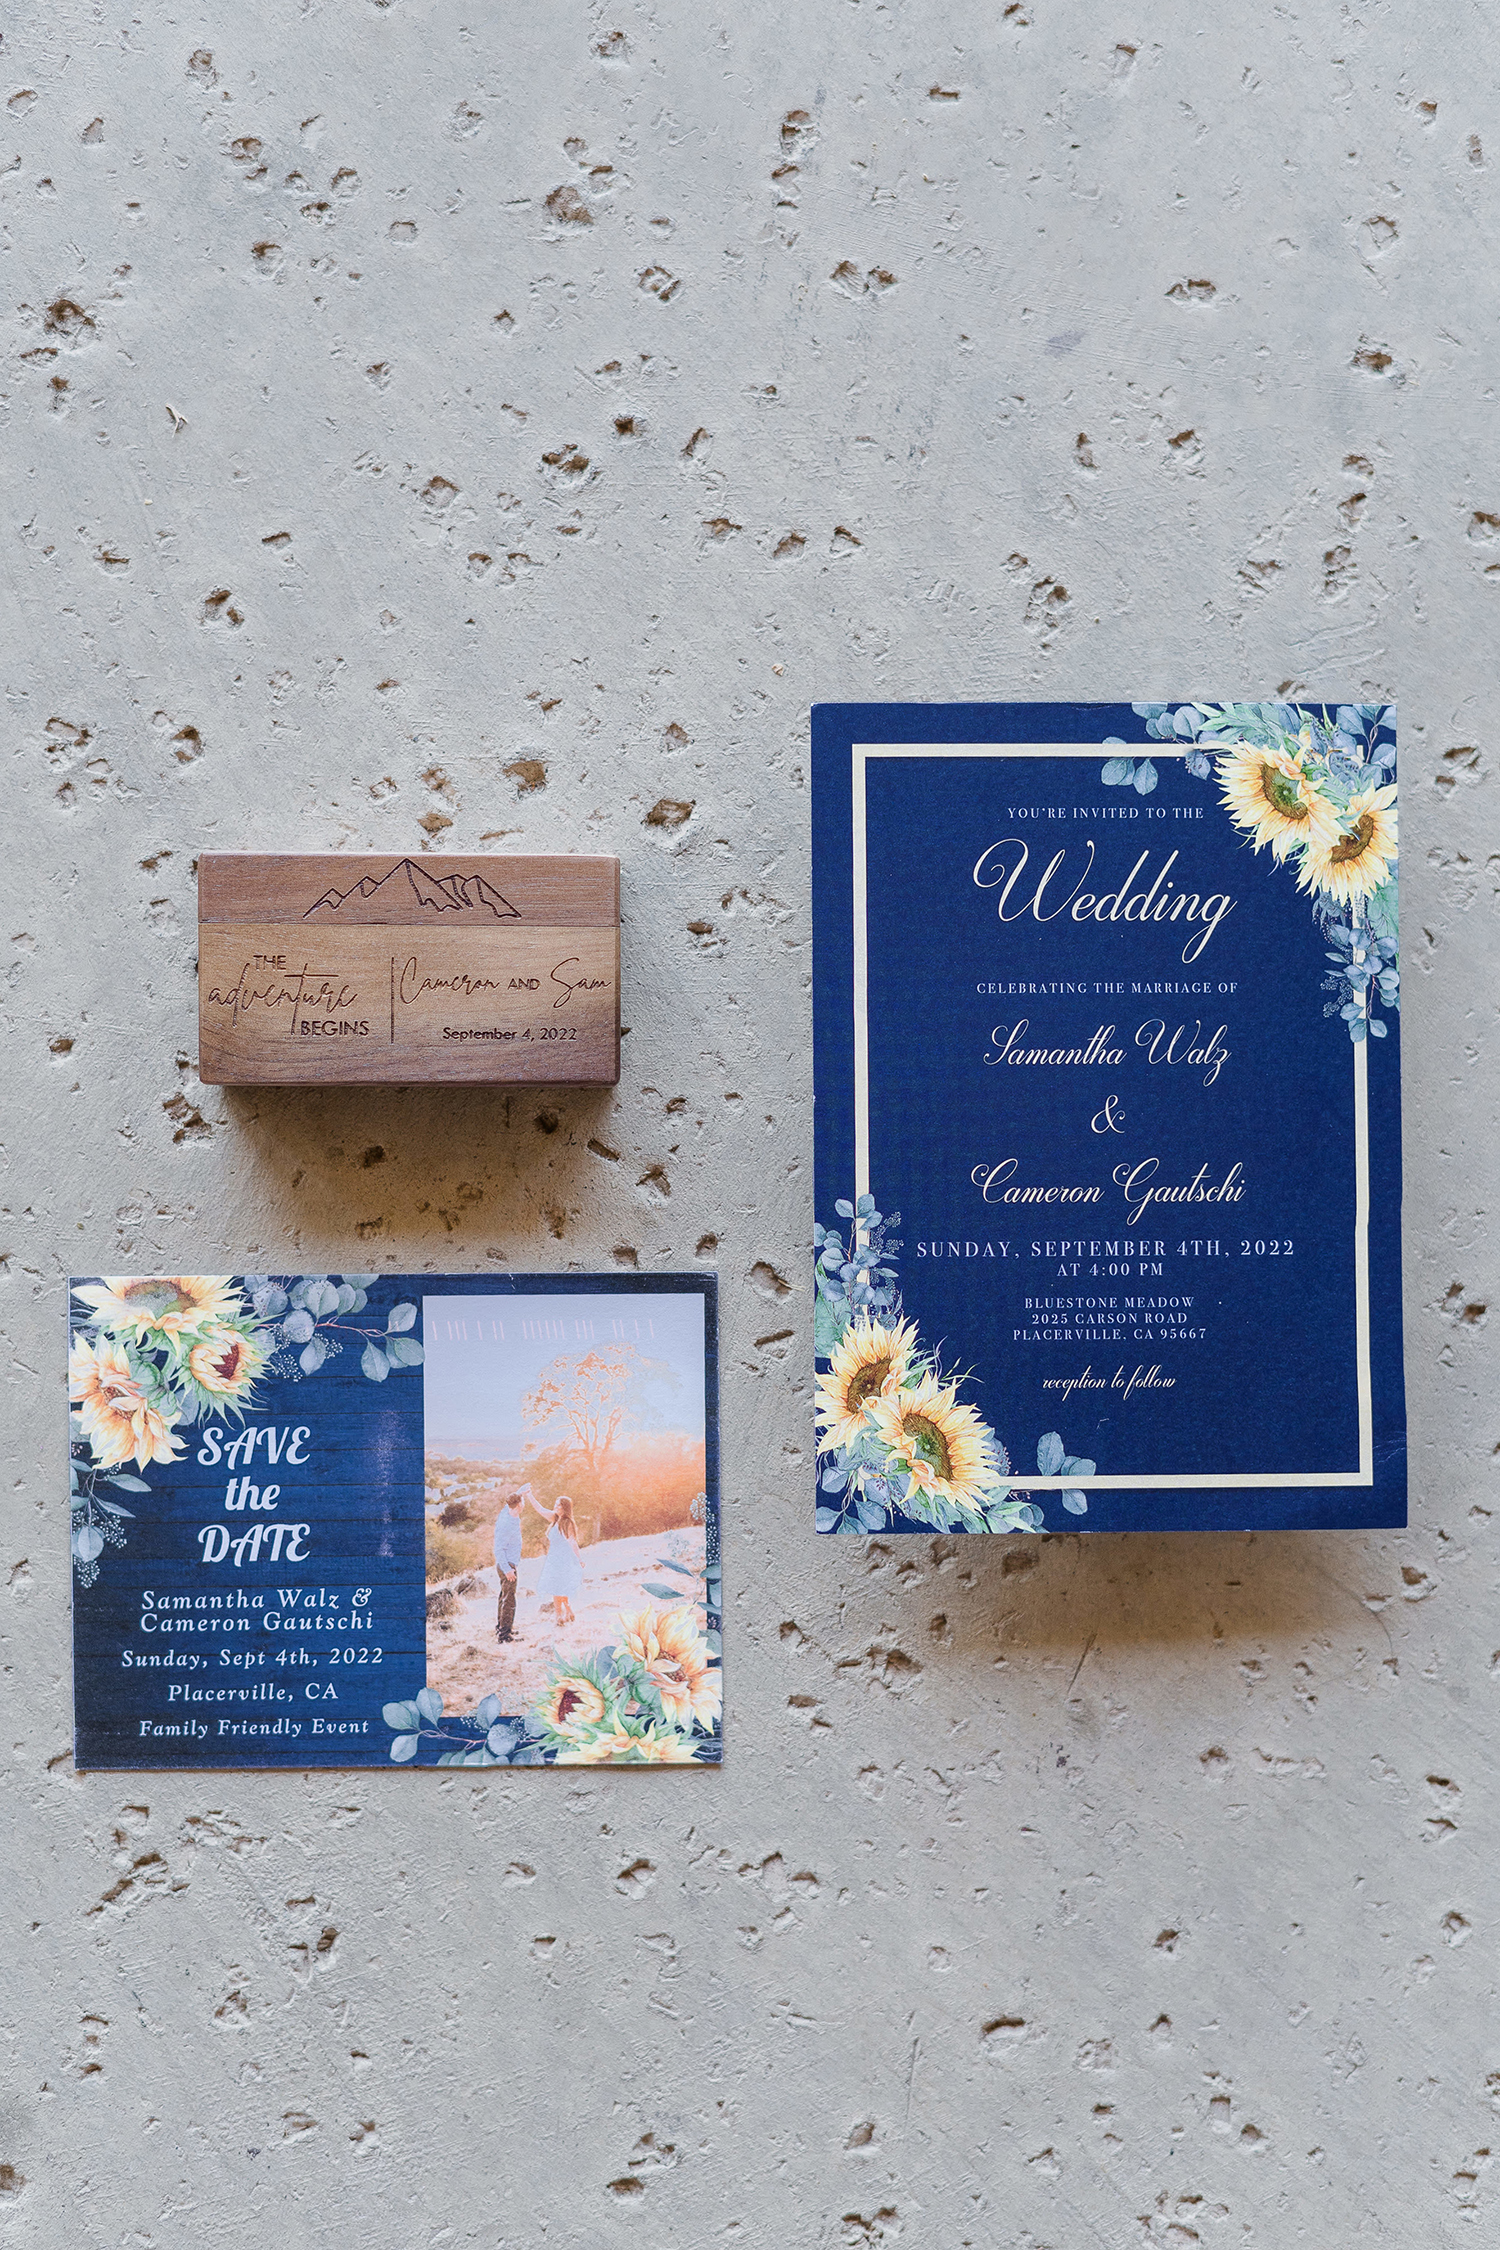 Apple Hill bluestone Meadow Wedding bridal details by Adrienne and Dani Photography